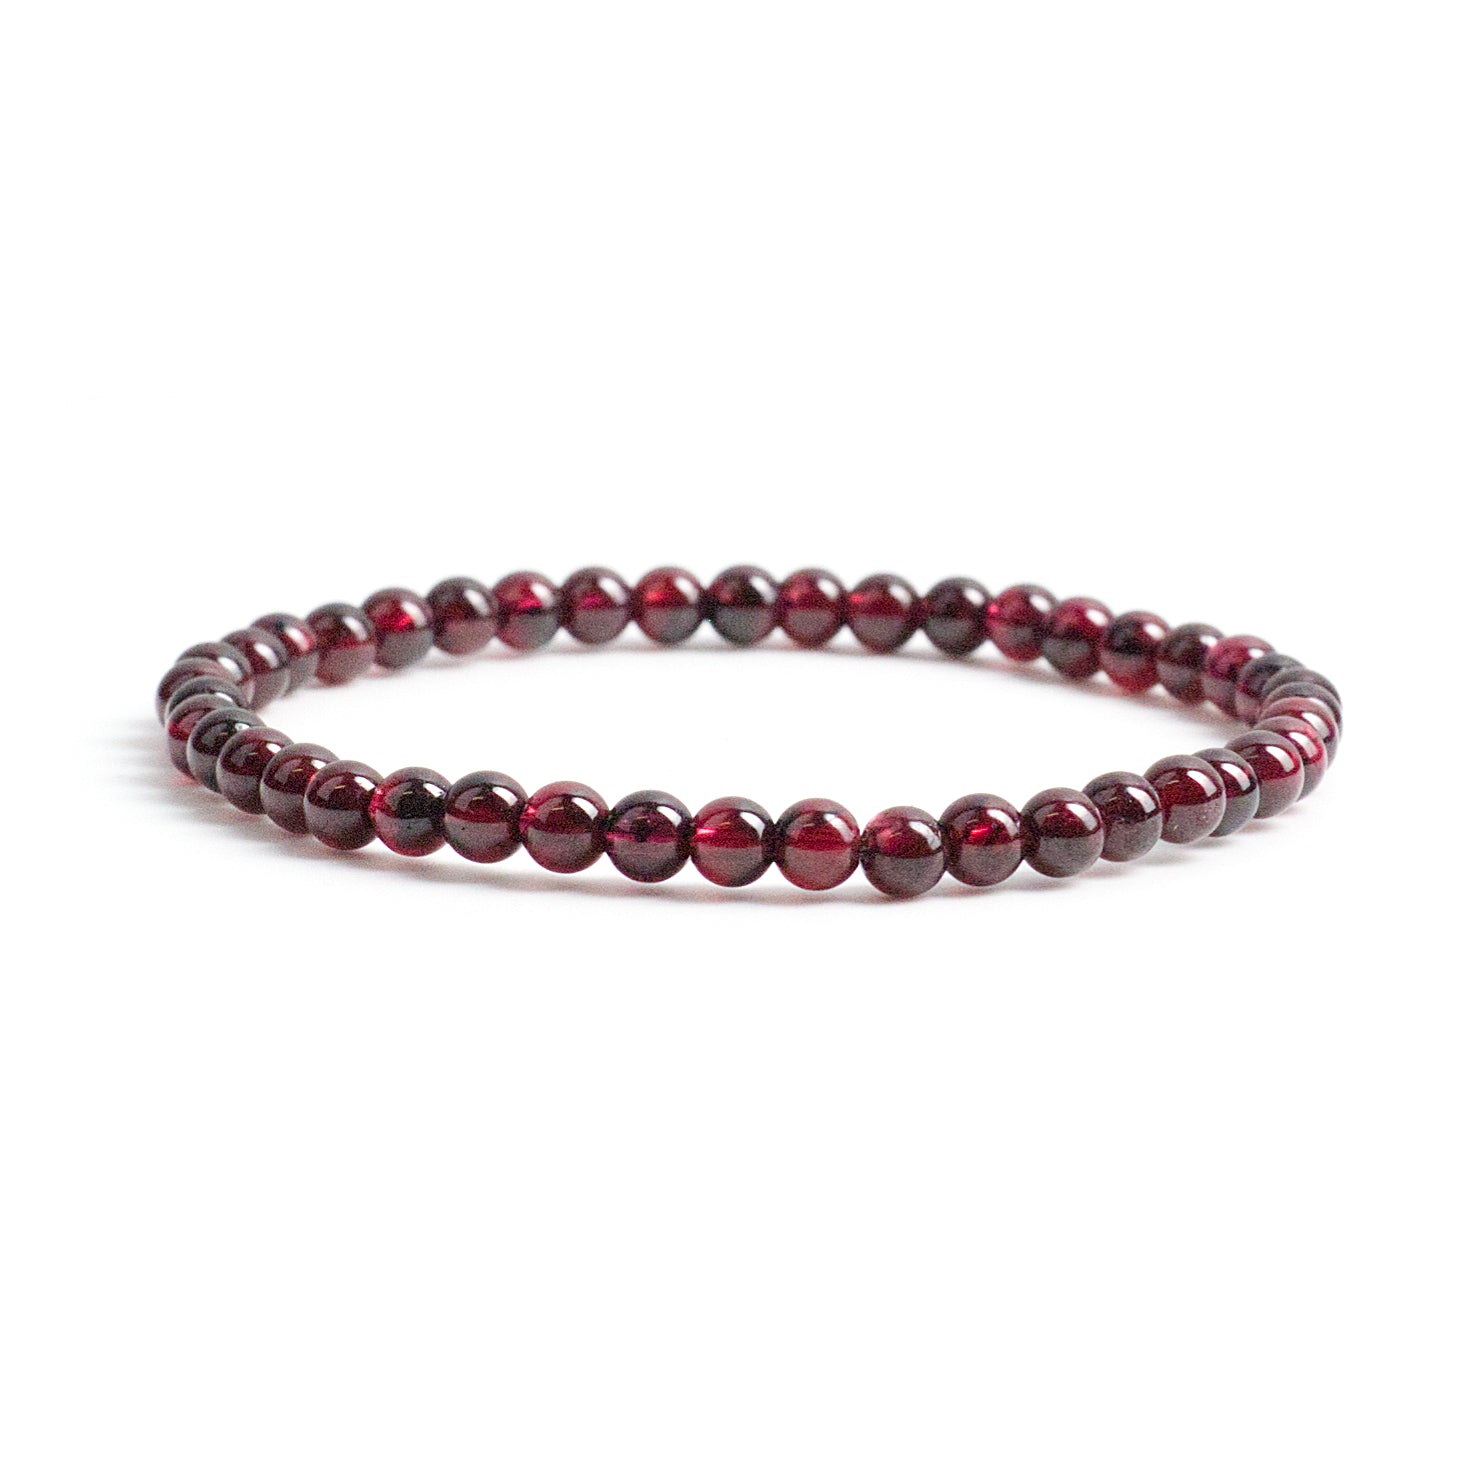 Stretch Bracelet | 4mm Beads (Red Garnet A Grade) Large